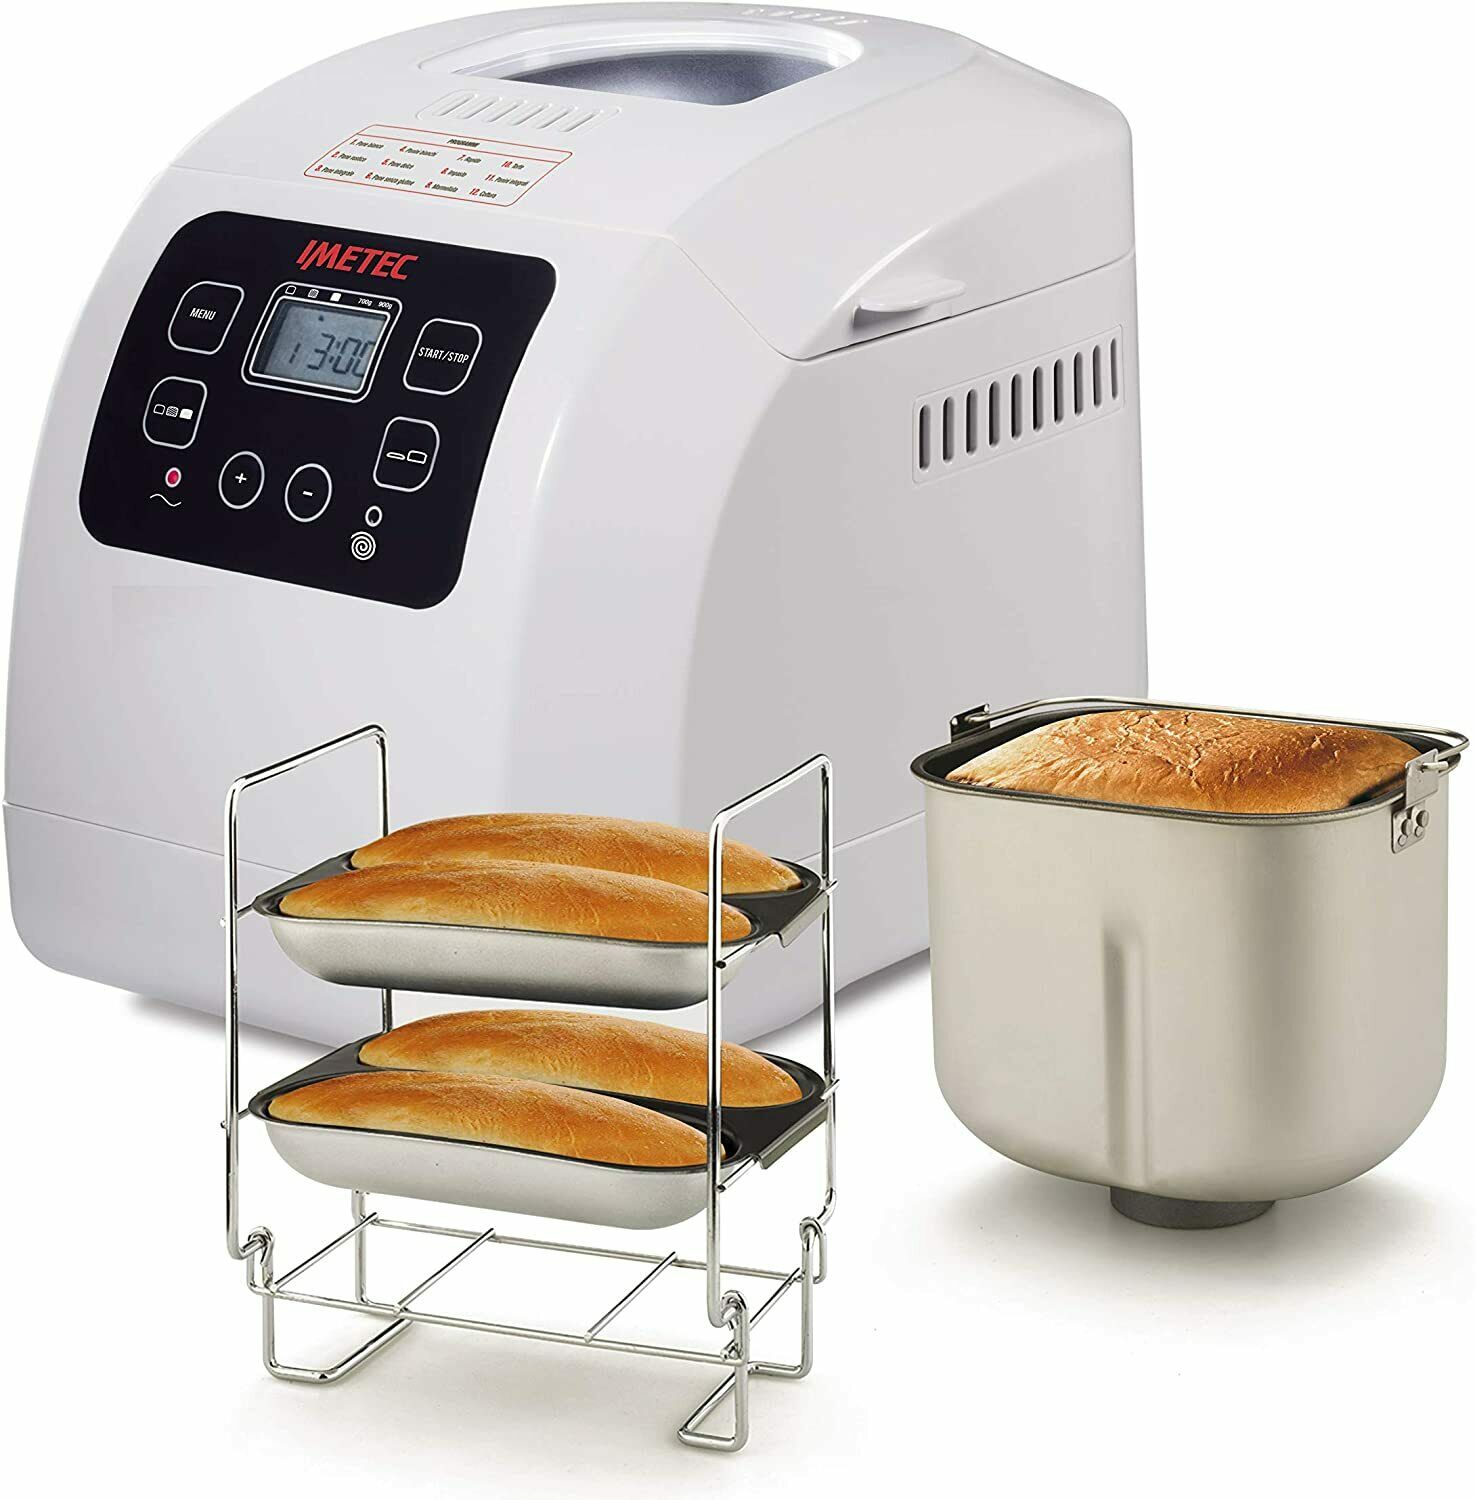 Macchine per pane per celiaci: modelli per fare pane senza glutine in casa